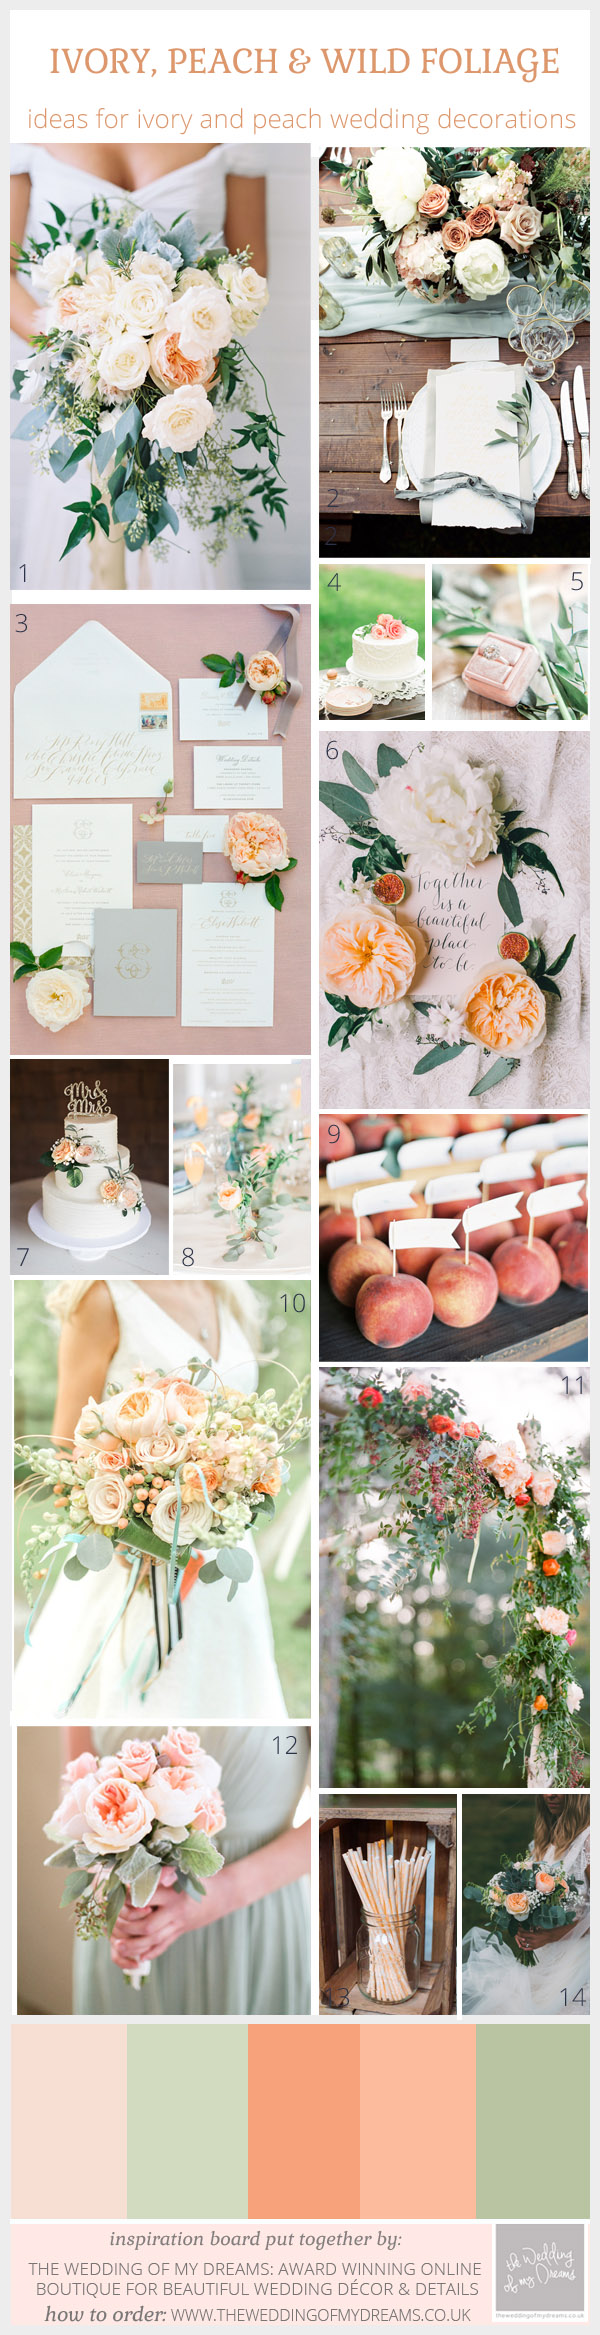 ivory peach green foliage wedding decorations and ideas.jpg